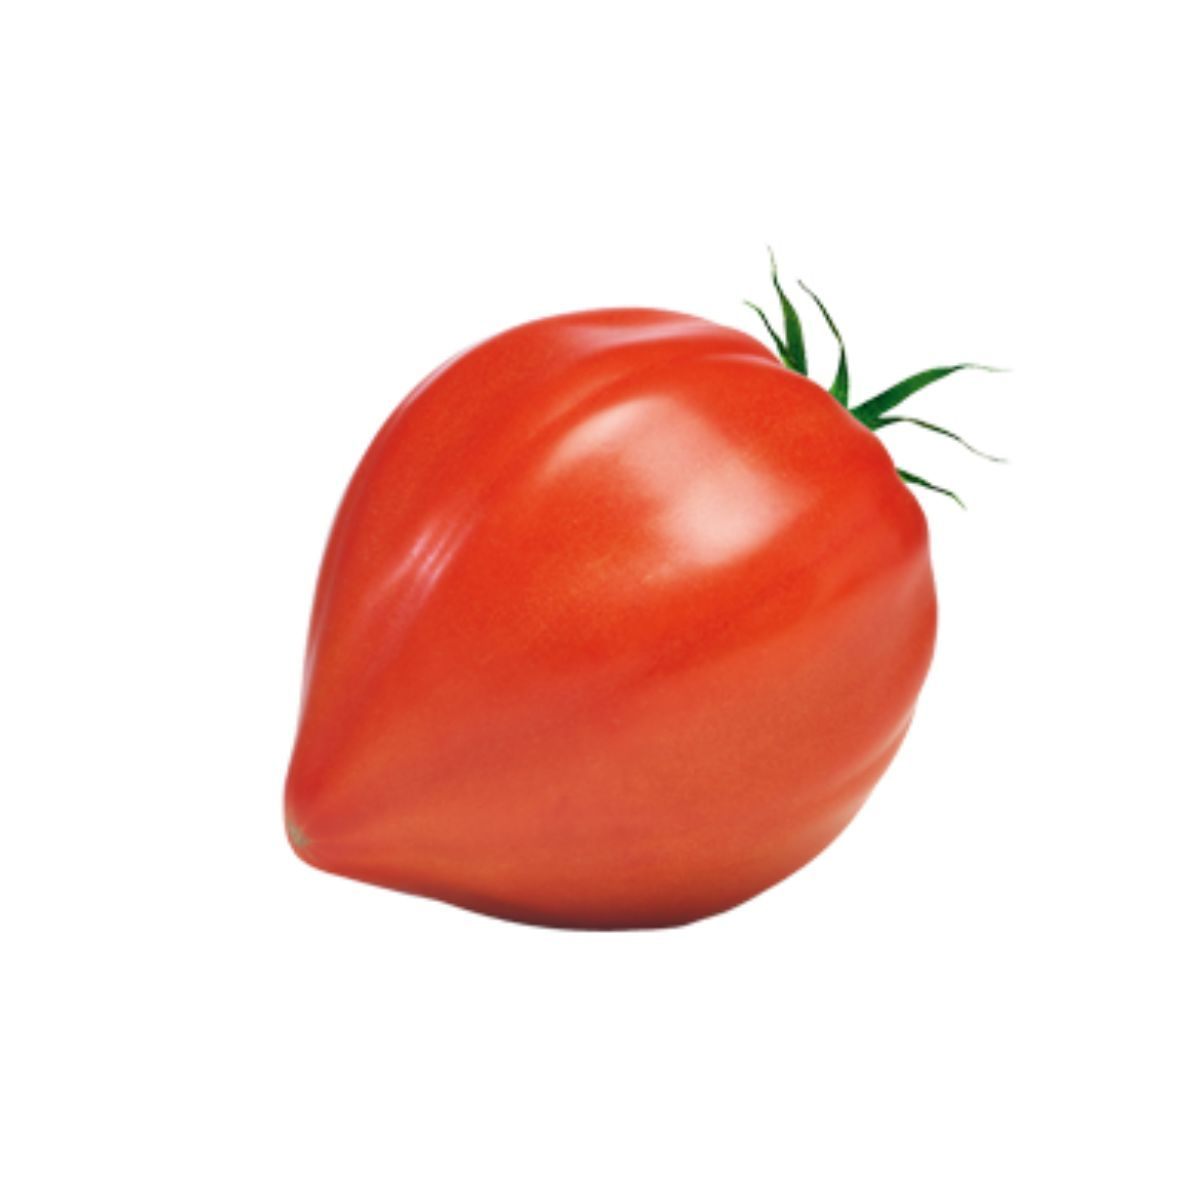 Tomate - Seminte Tomate INIMA DE BOU (Coeur de Boeuf) Pop Vriend 5 g, hectarul.ro